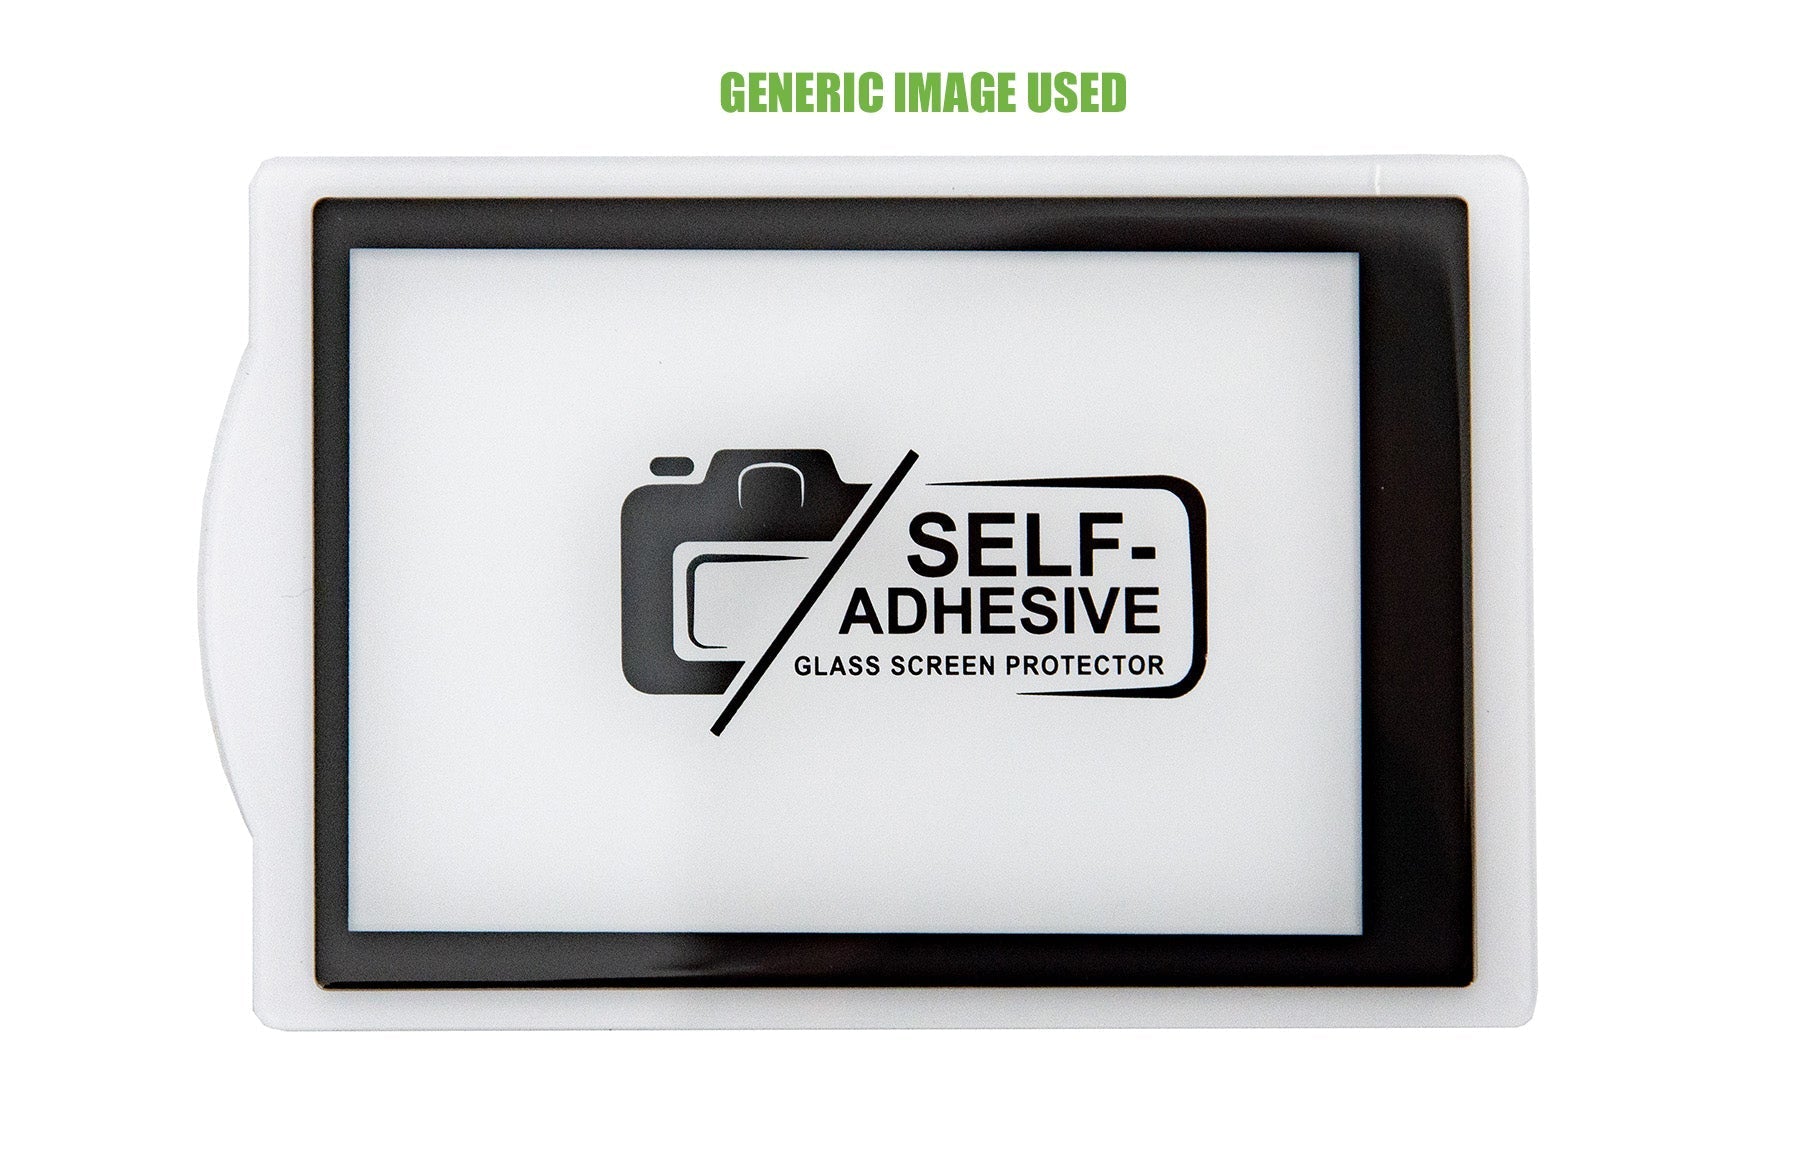 GGS Foto Larmor GEN4 Screen Protector for 3" LCD 16:9 Ratio